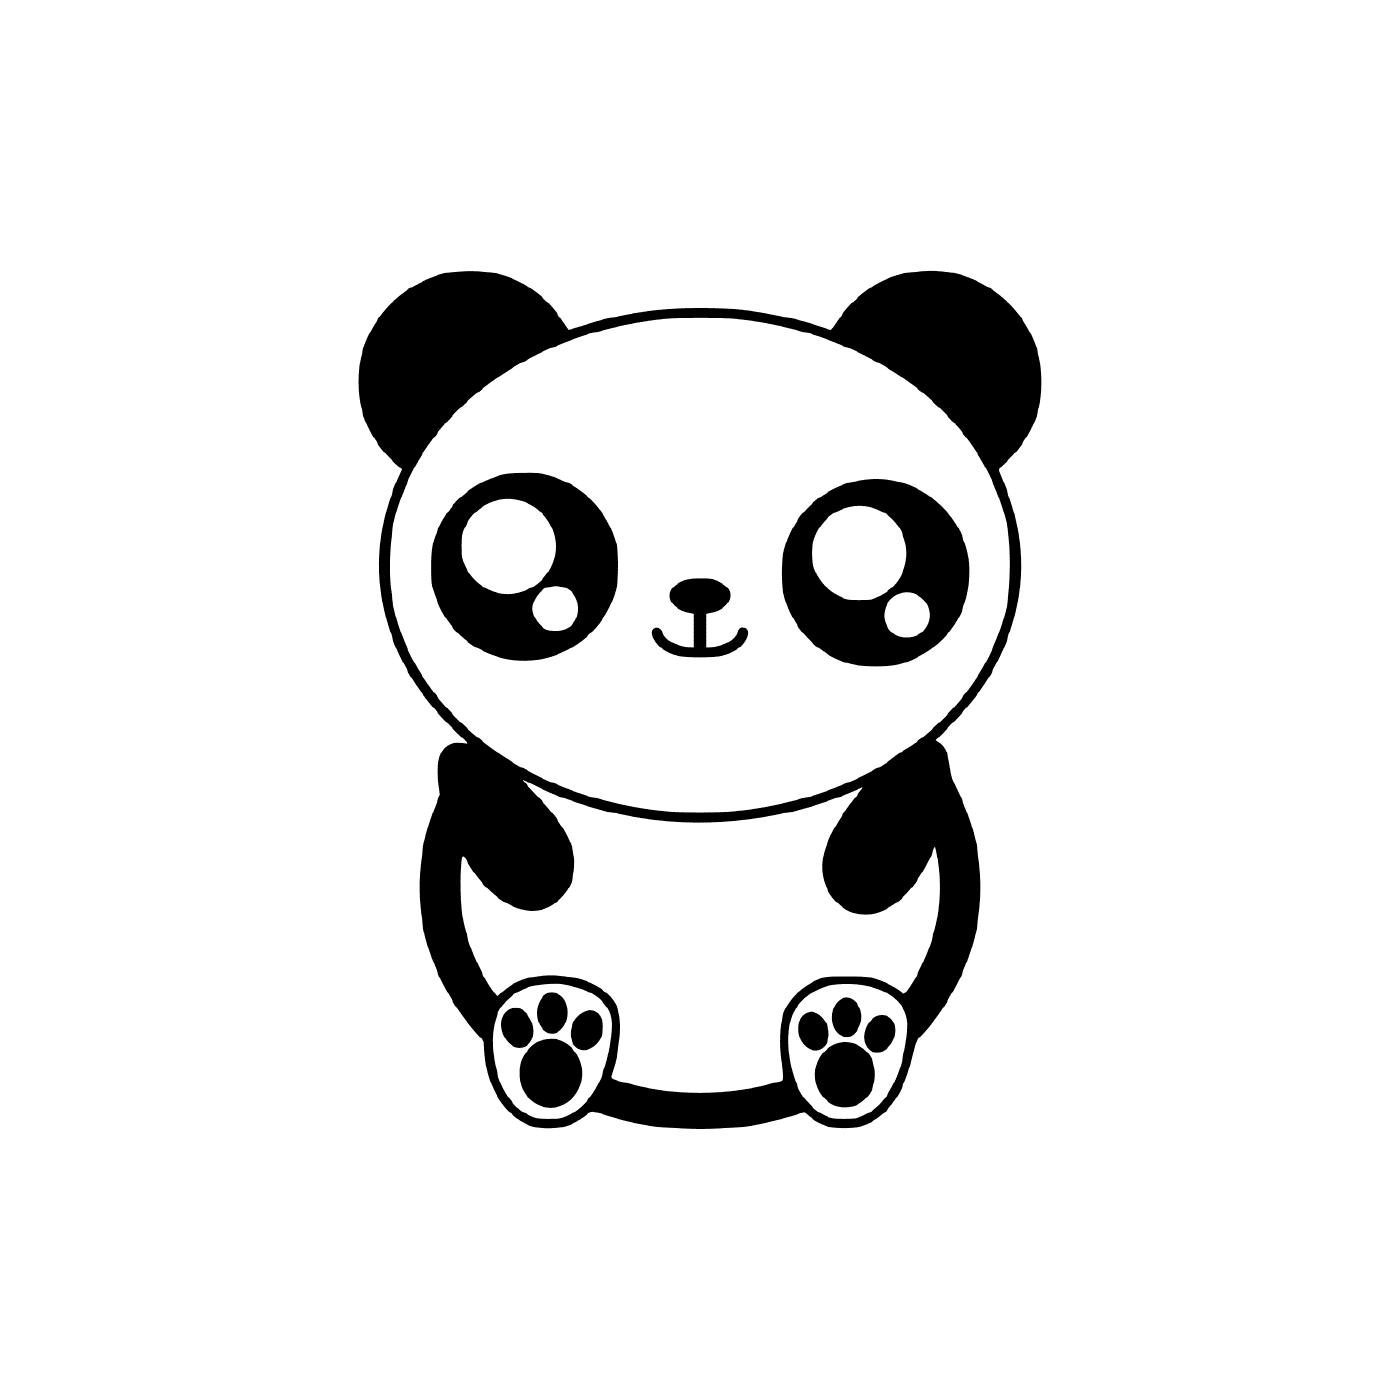  dulce adorable panda 